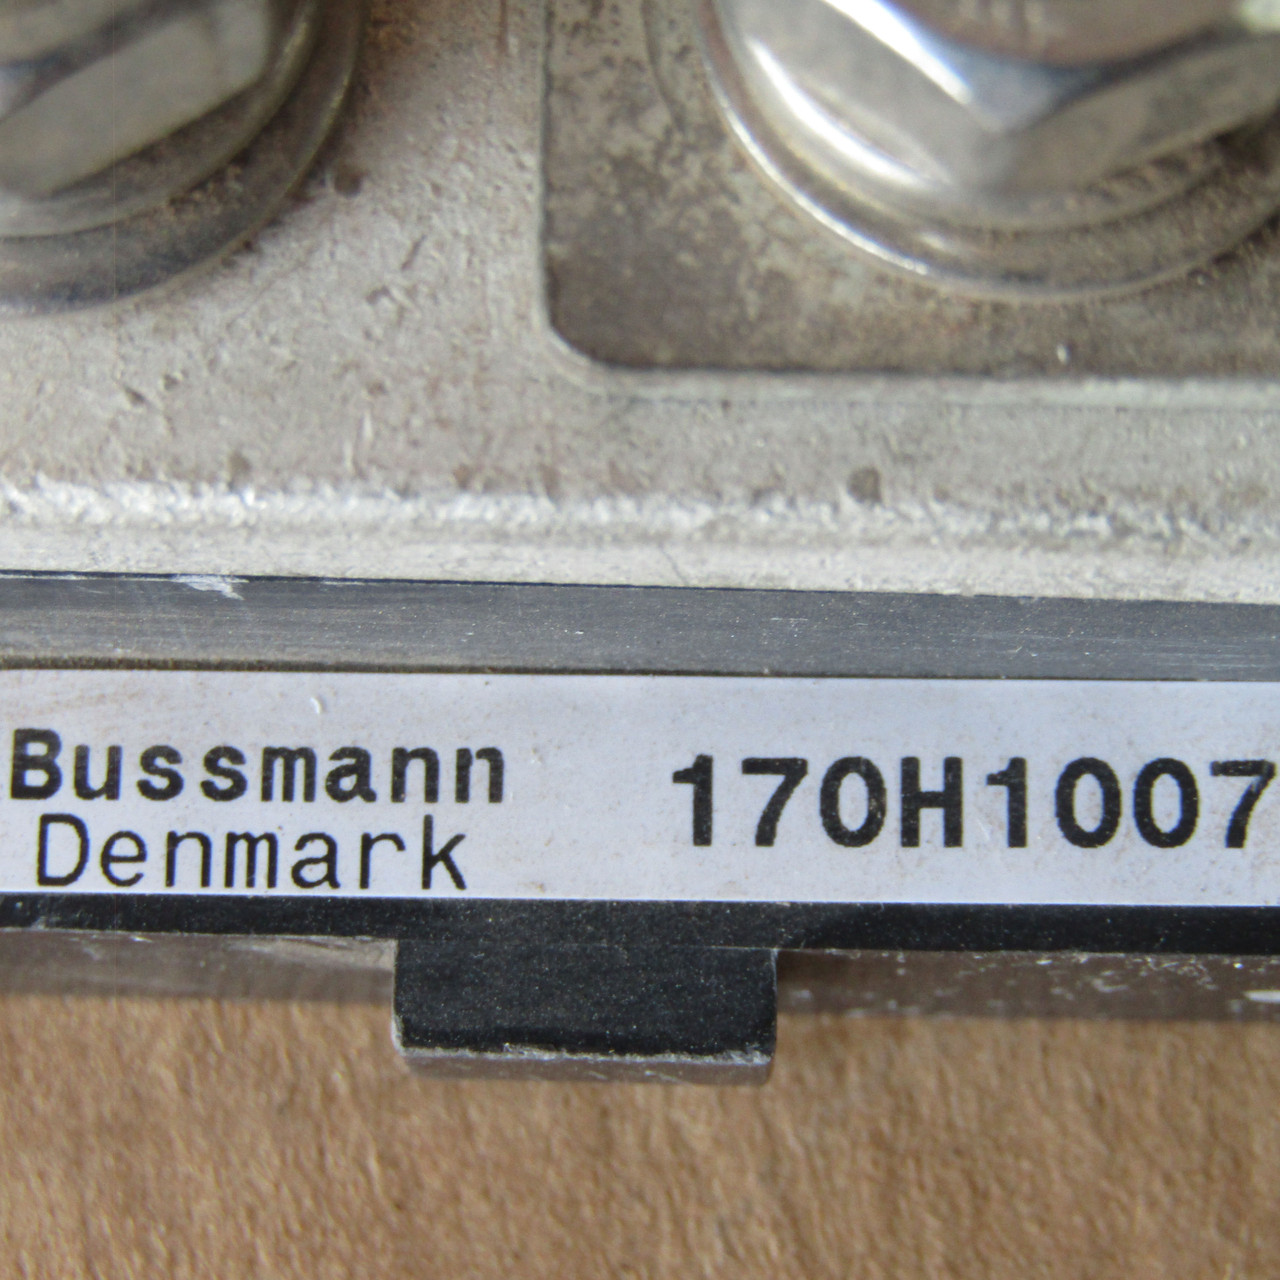 Bussmann 170M1372 315A 690V Fuse w/ 170H1007 Fuse Holder - Used